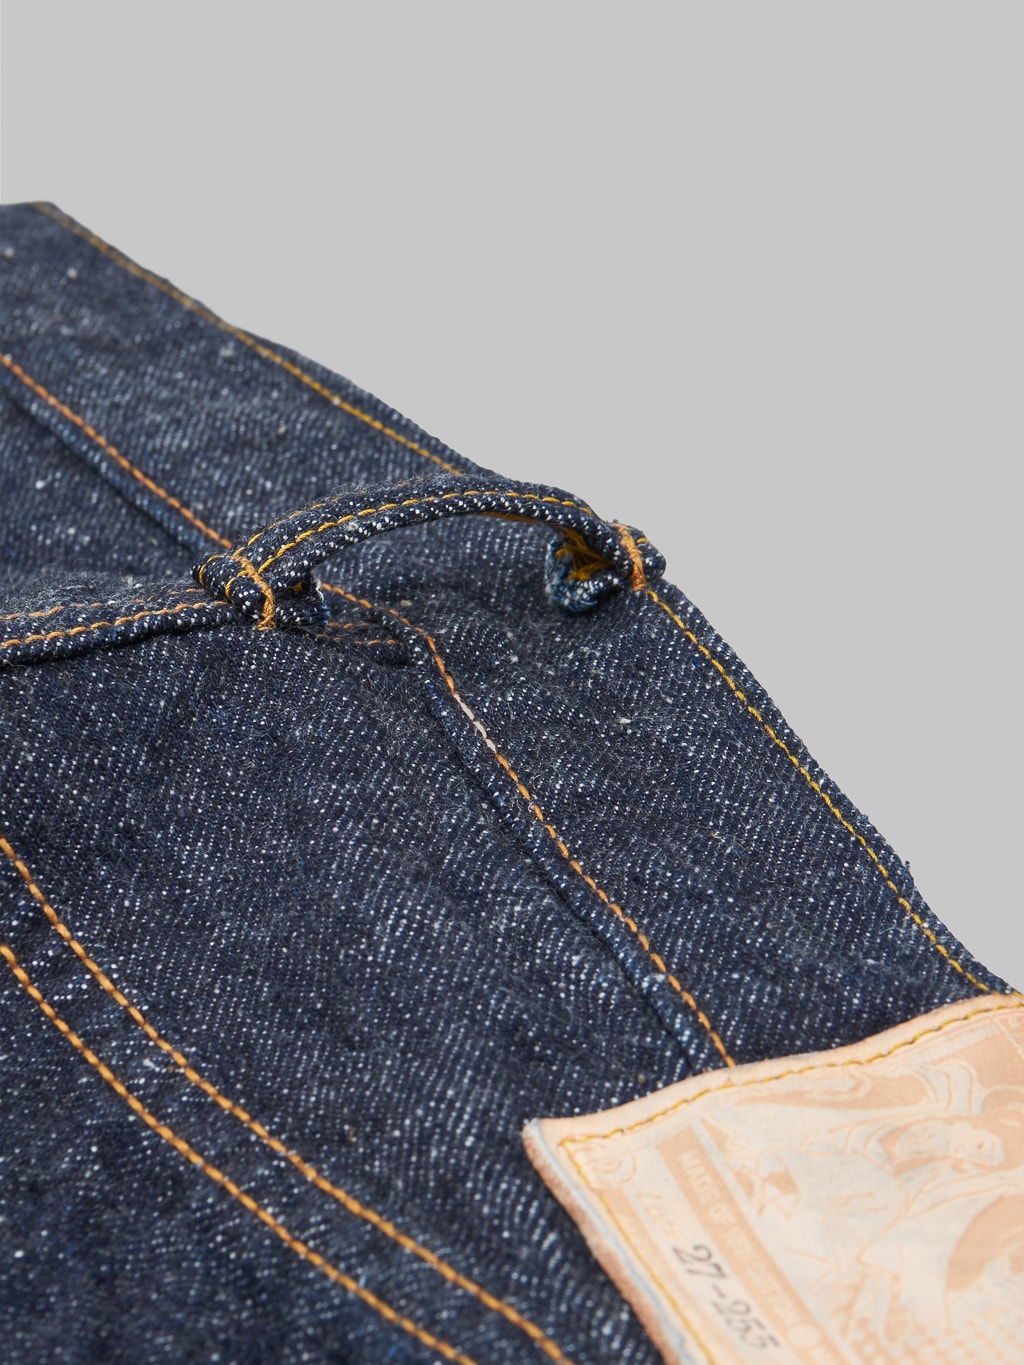 Samurai Jeans S0255XX Ushiwaka 15oz jeans belt loop